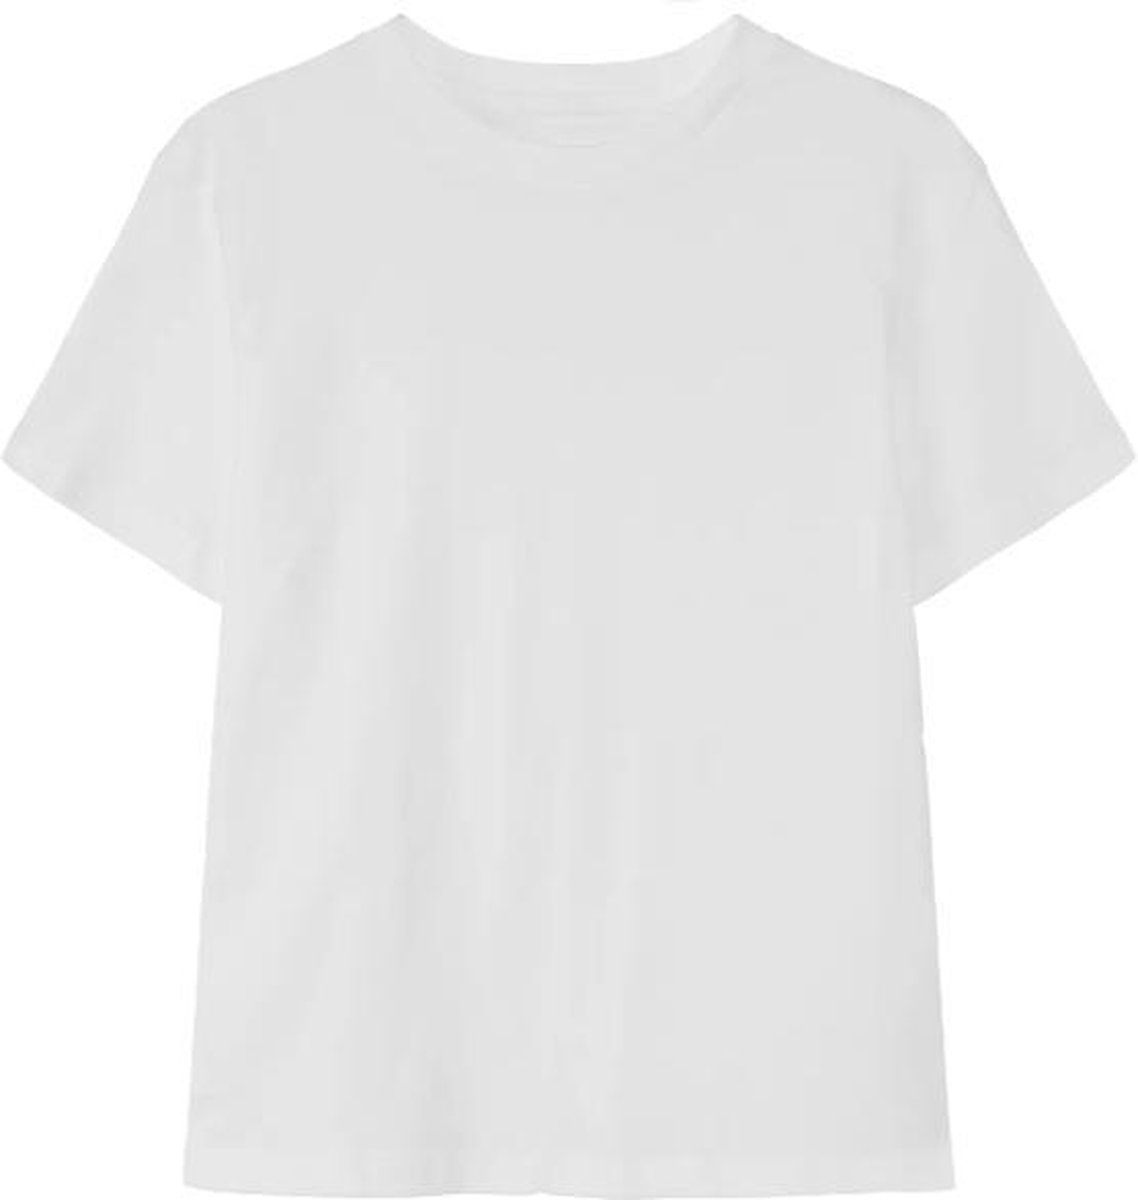 MOOI! Company - Los vallend basis T-shirt - Dames Top - NICKY - Kleur Wit - M